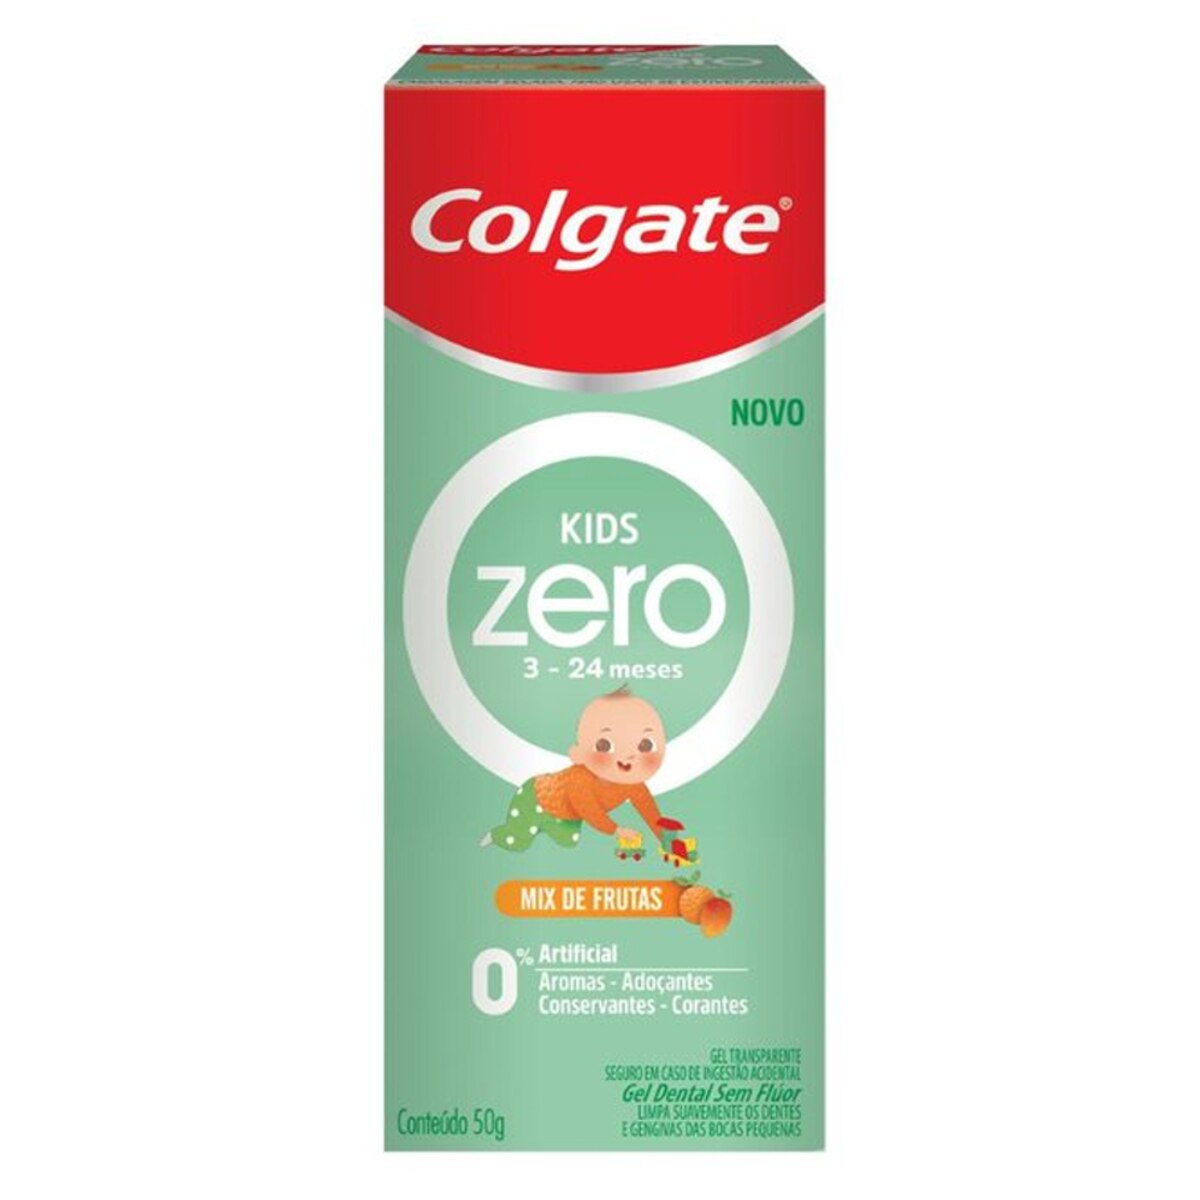 Gel Dental Colgate Kids Zero 3-24 meses Mix de Frutas 50g